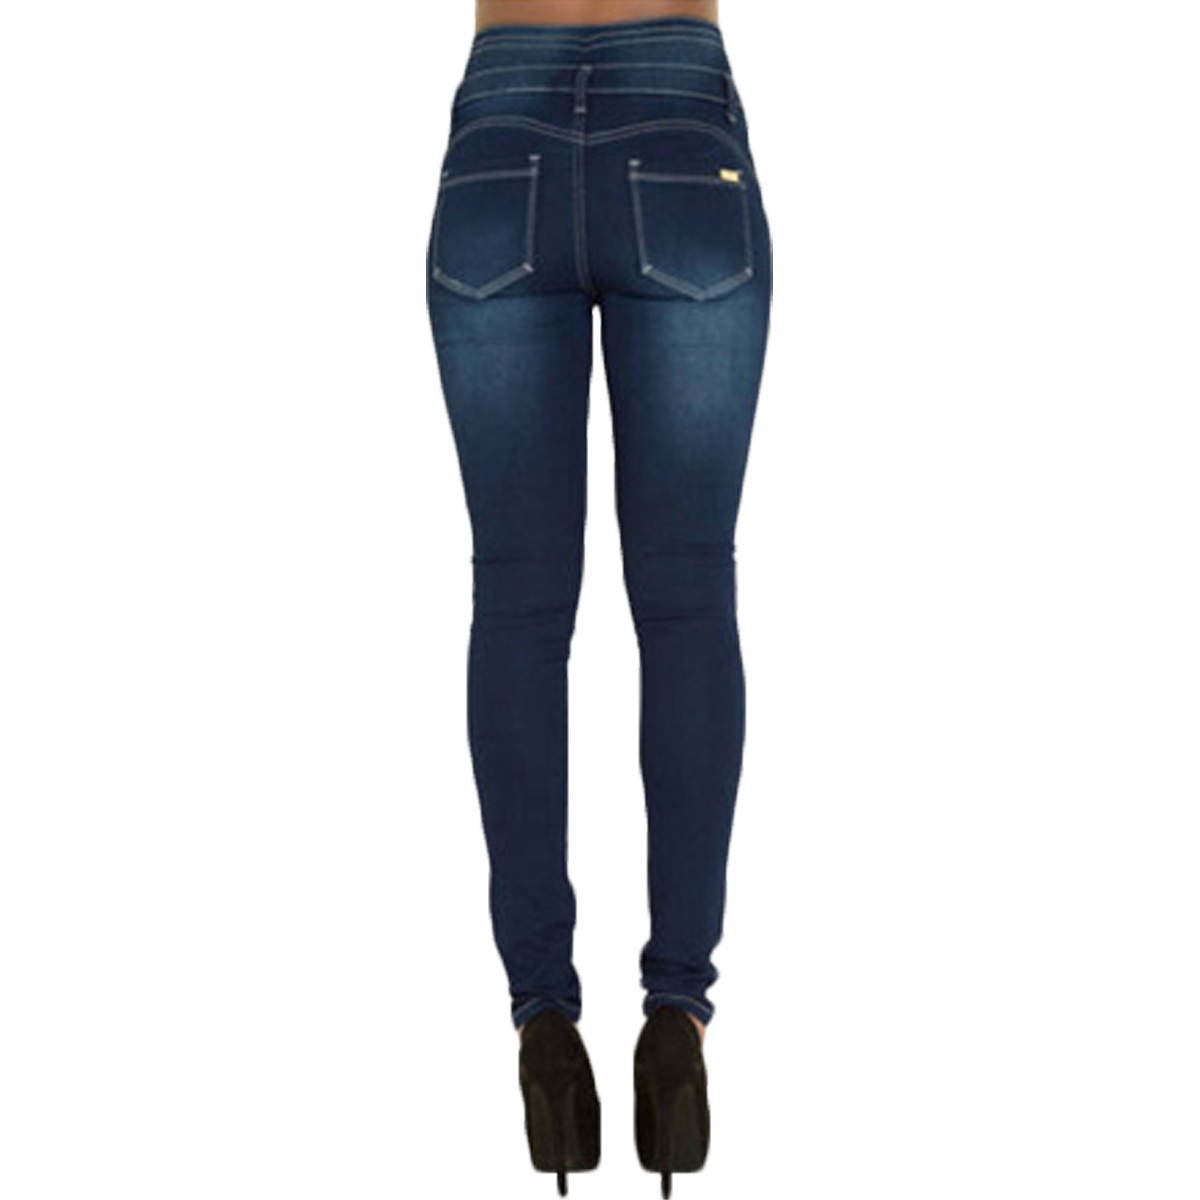 Women's high waist stretch pants denim pencil skinny jeans trousers Indigo Blue - image 5 of 5